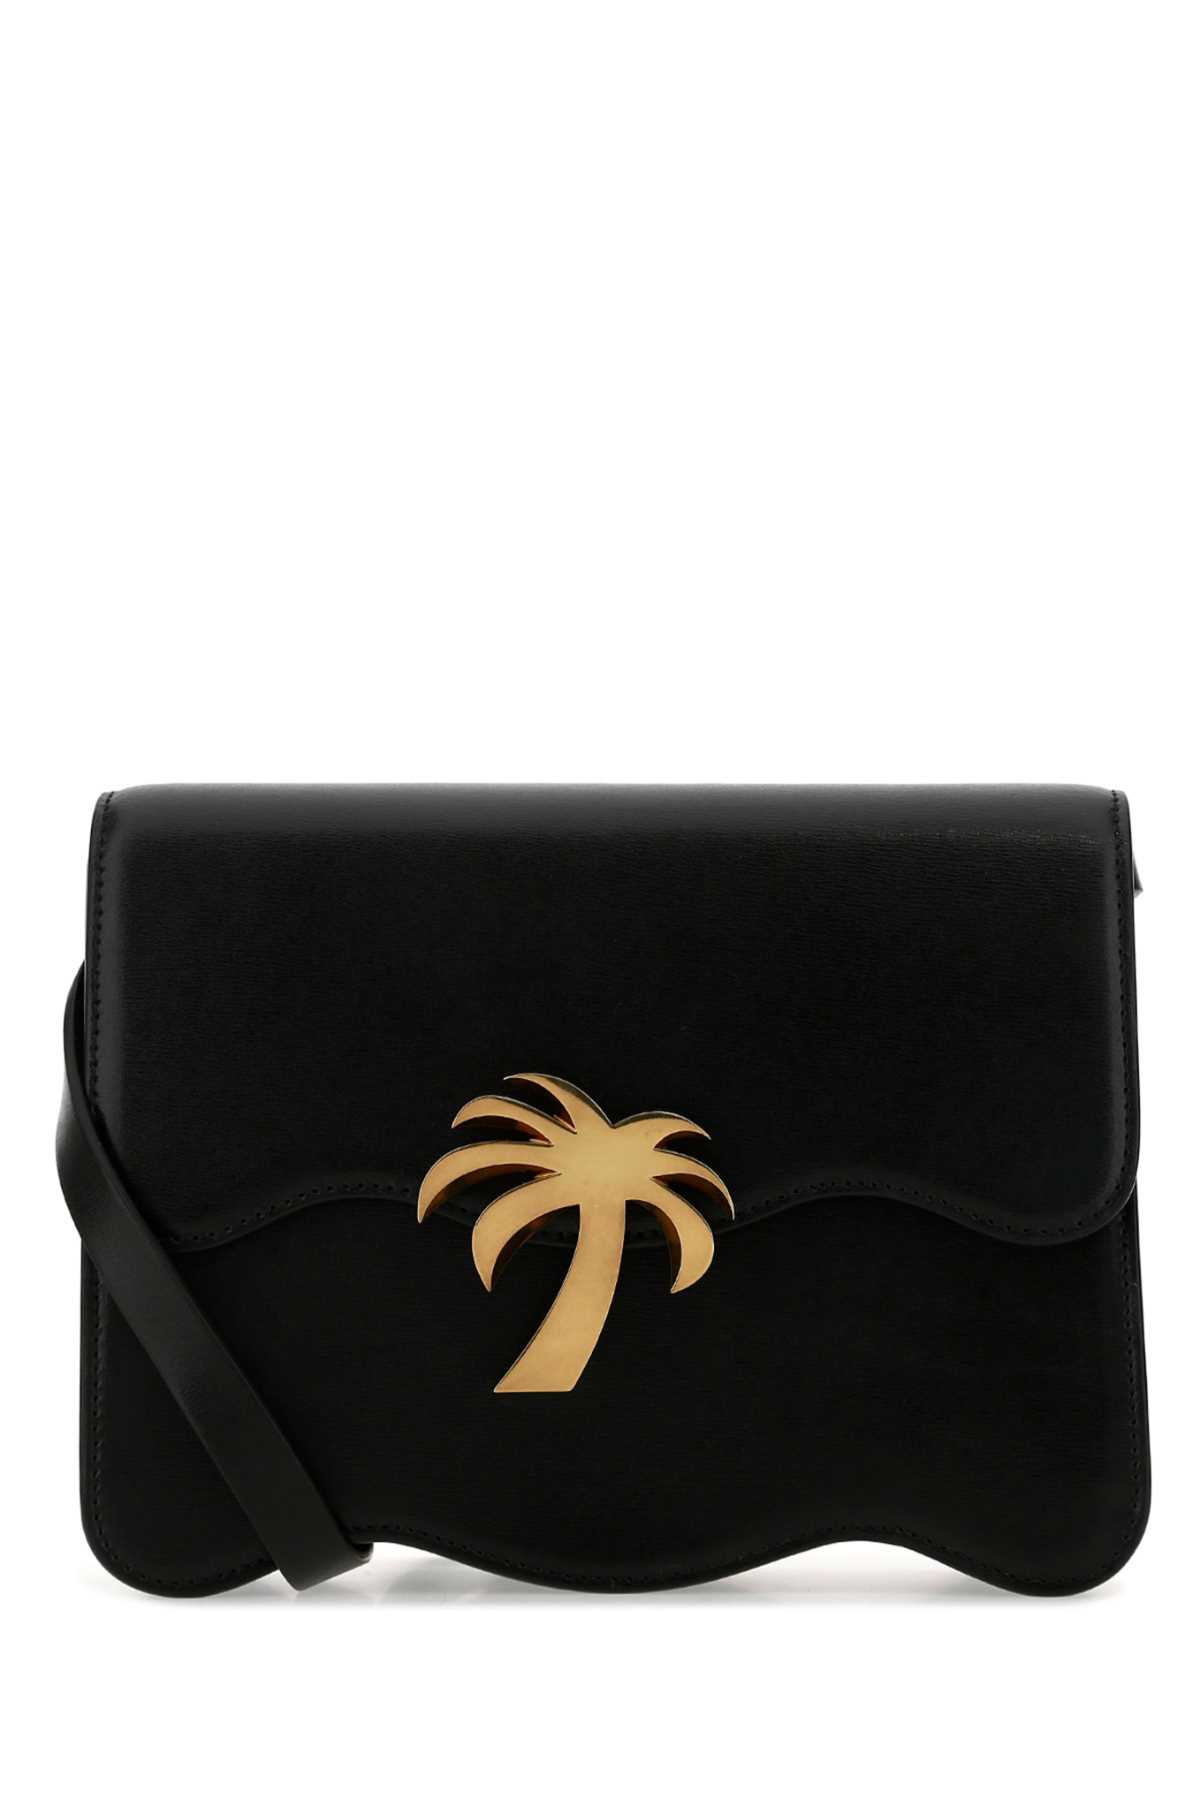 Palm Angels Black Leather Palm Beach Crossbody Bag